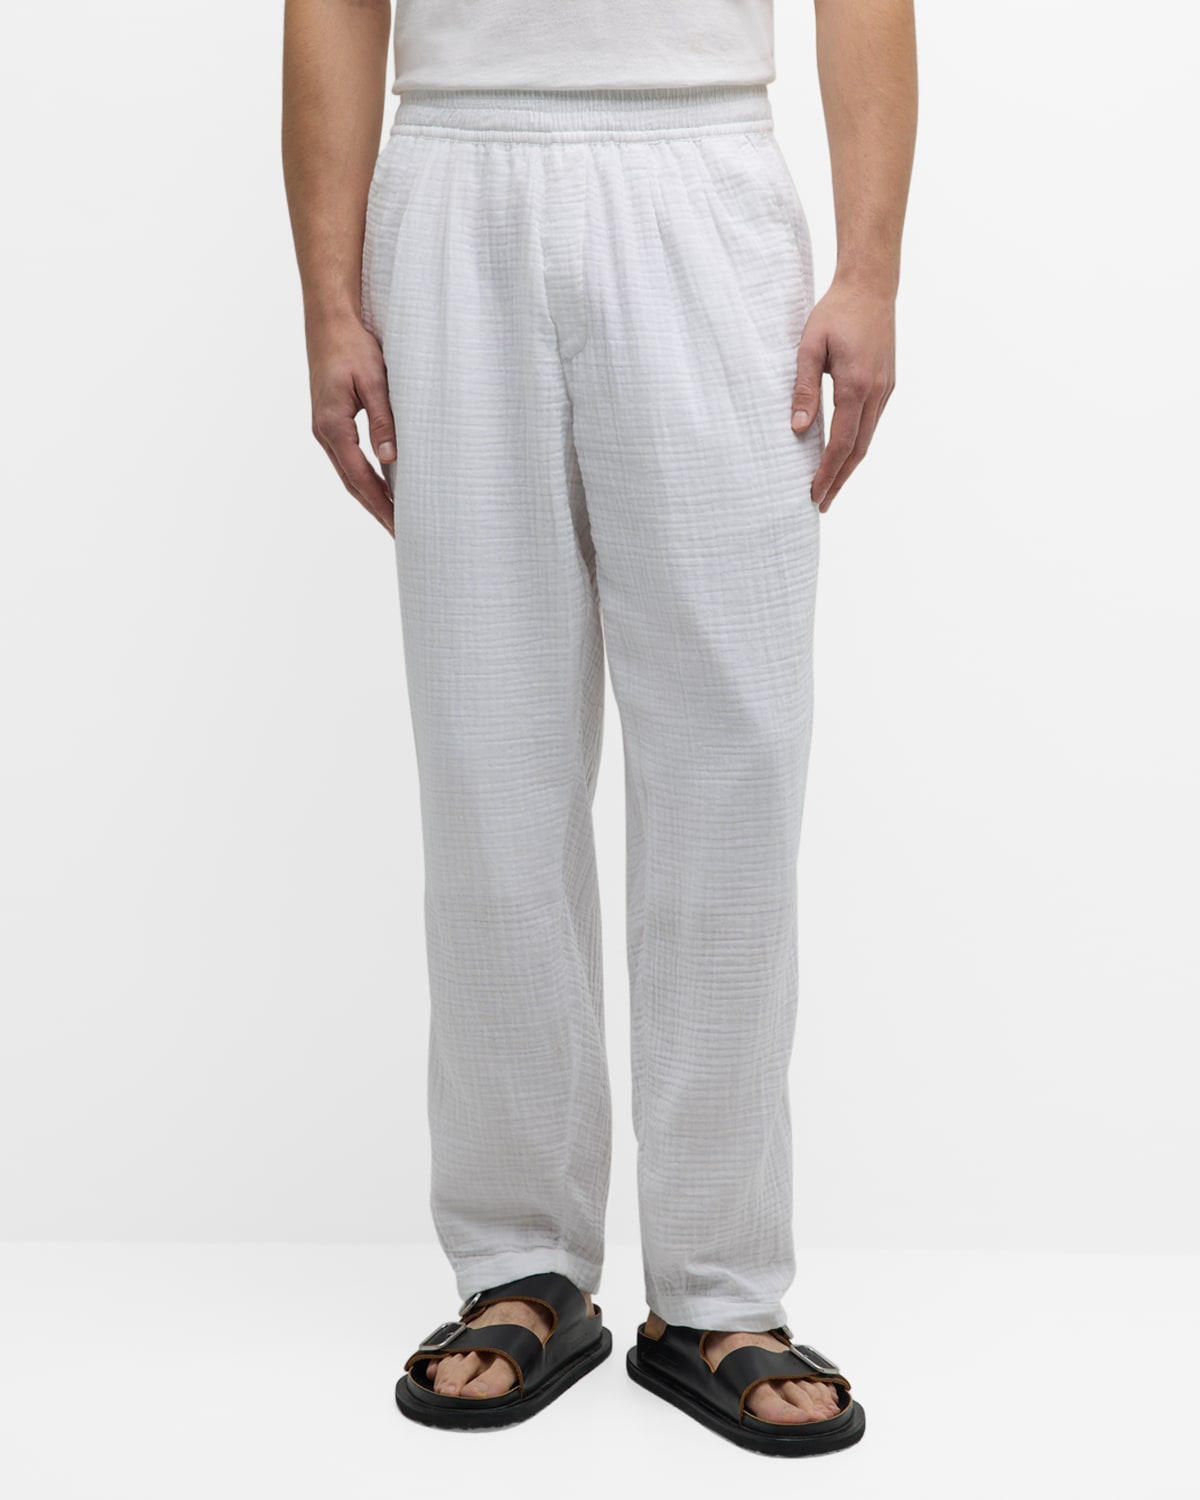 Men's Cotton Lawn Lounge Pants